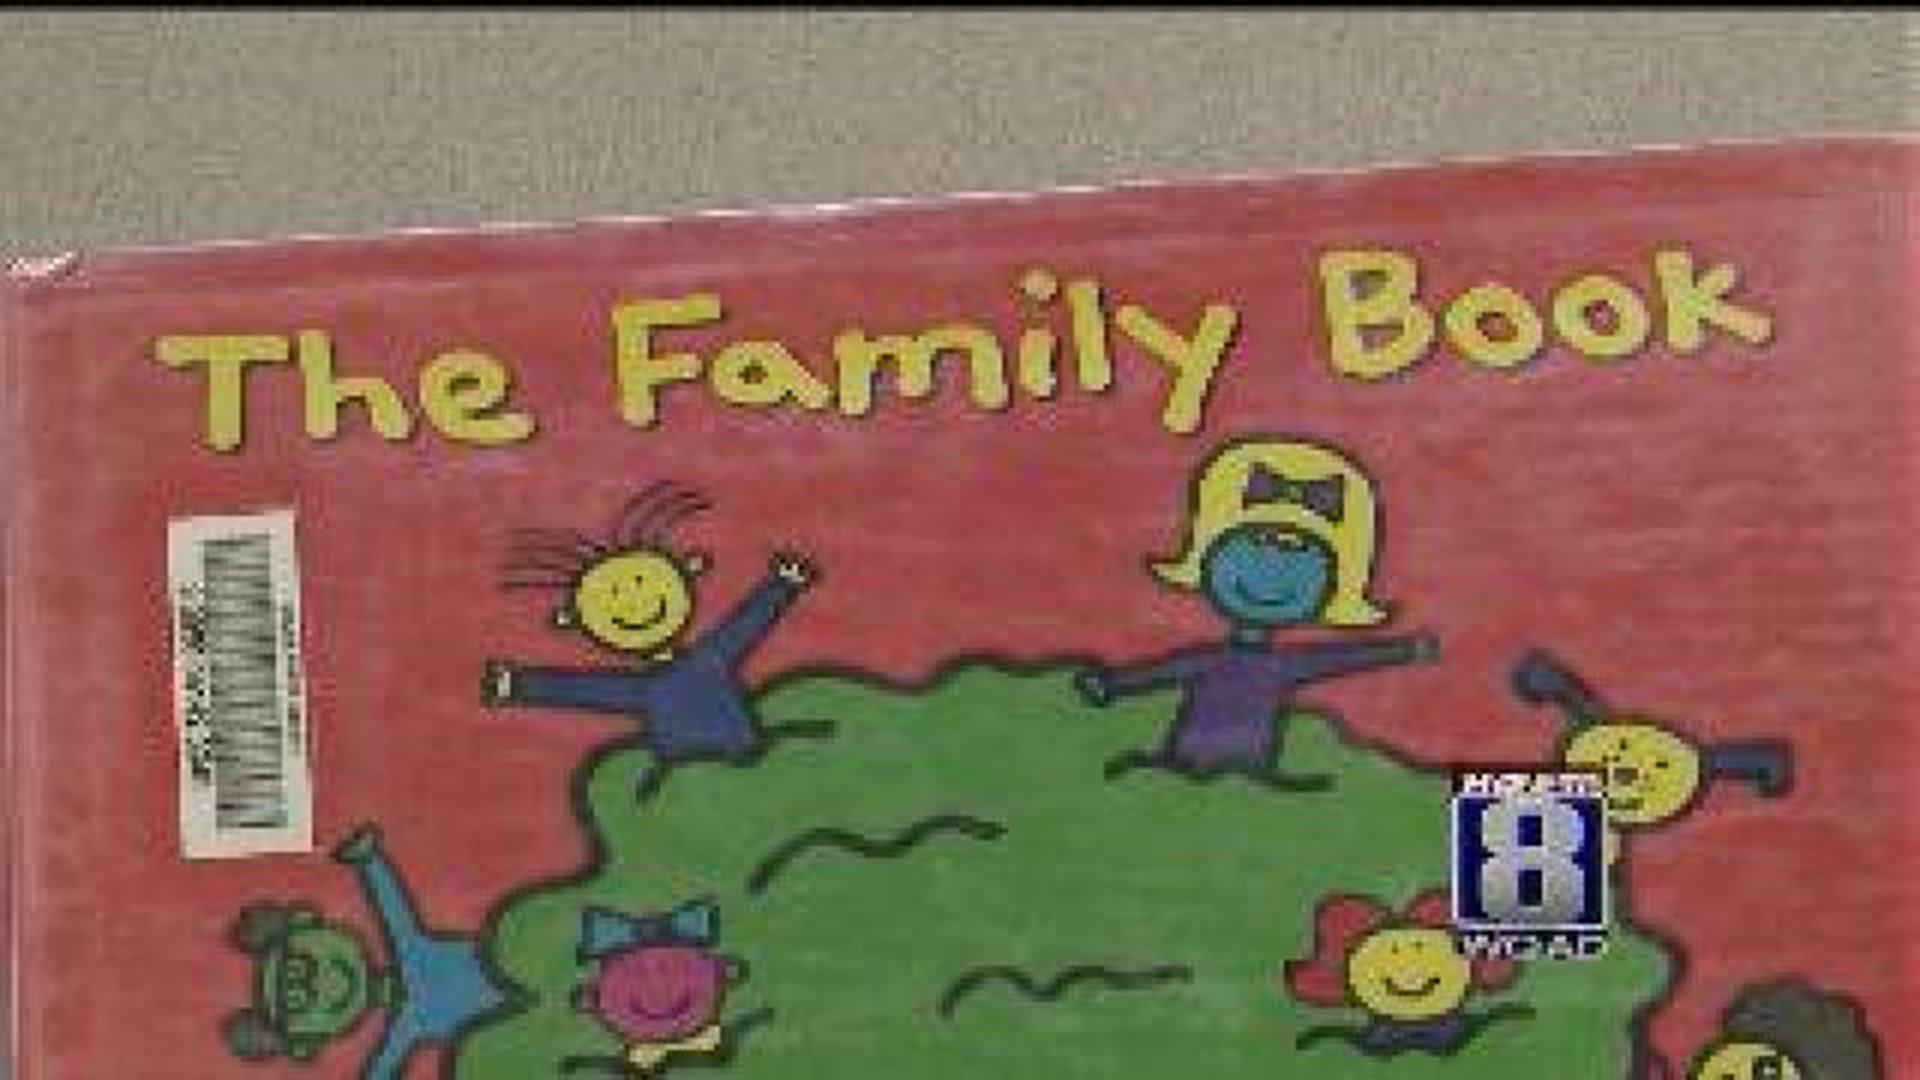 Parents sound off about Erie book ban